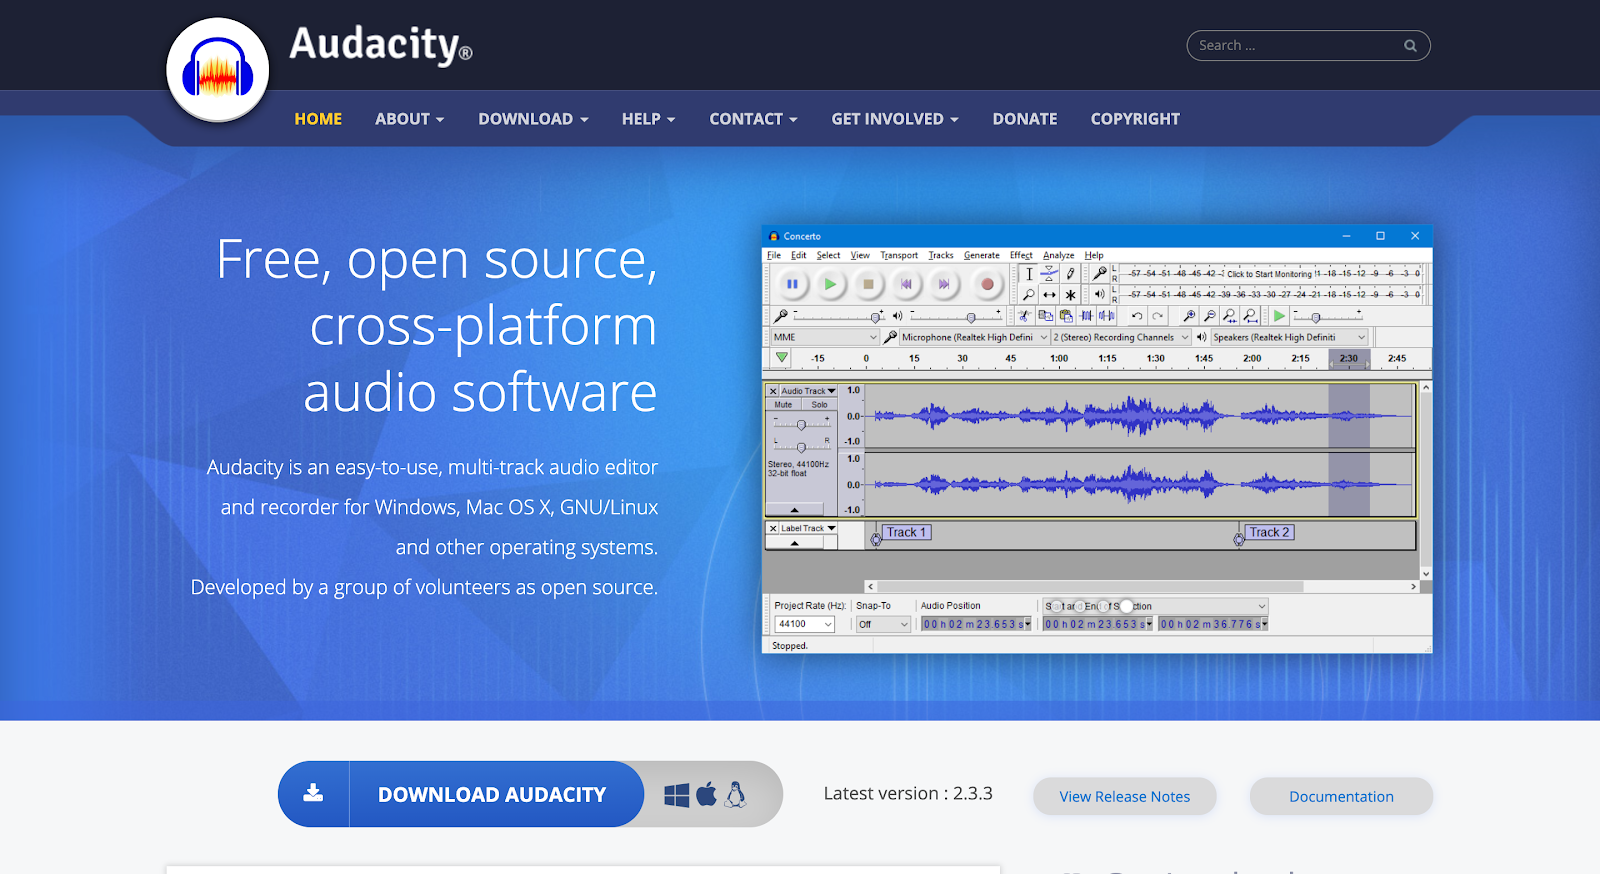 audacity podcast software